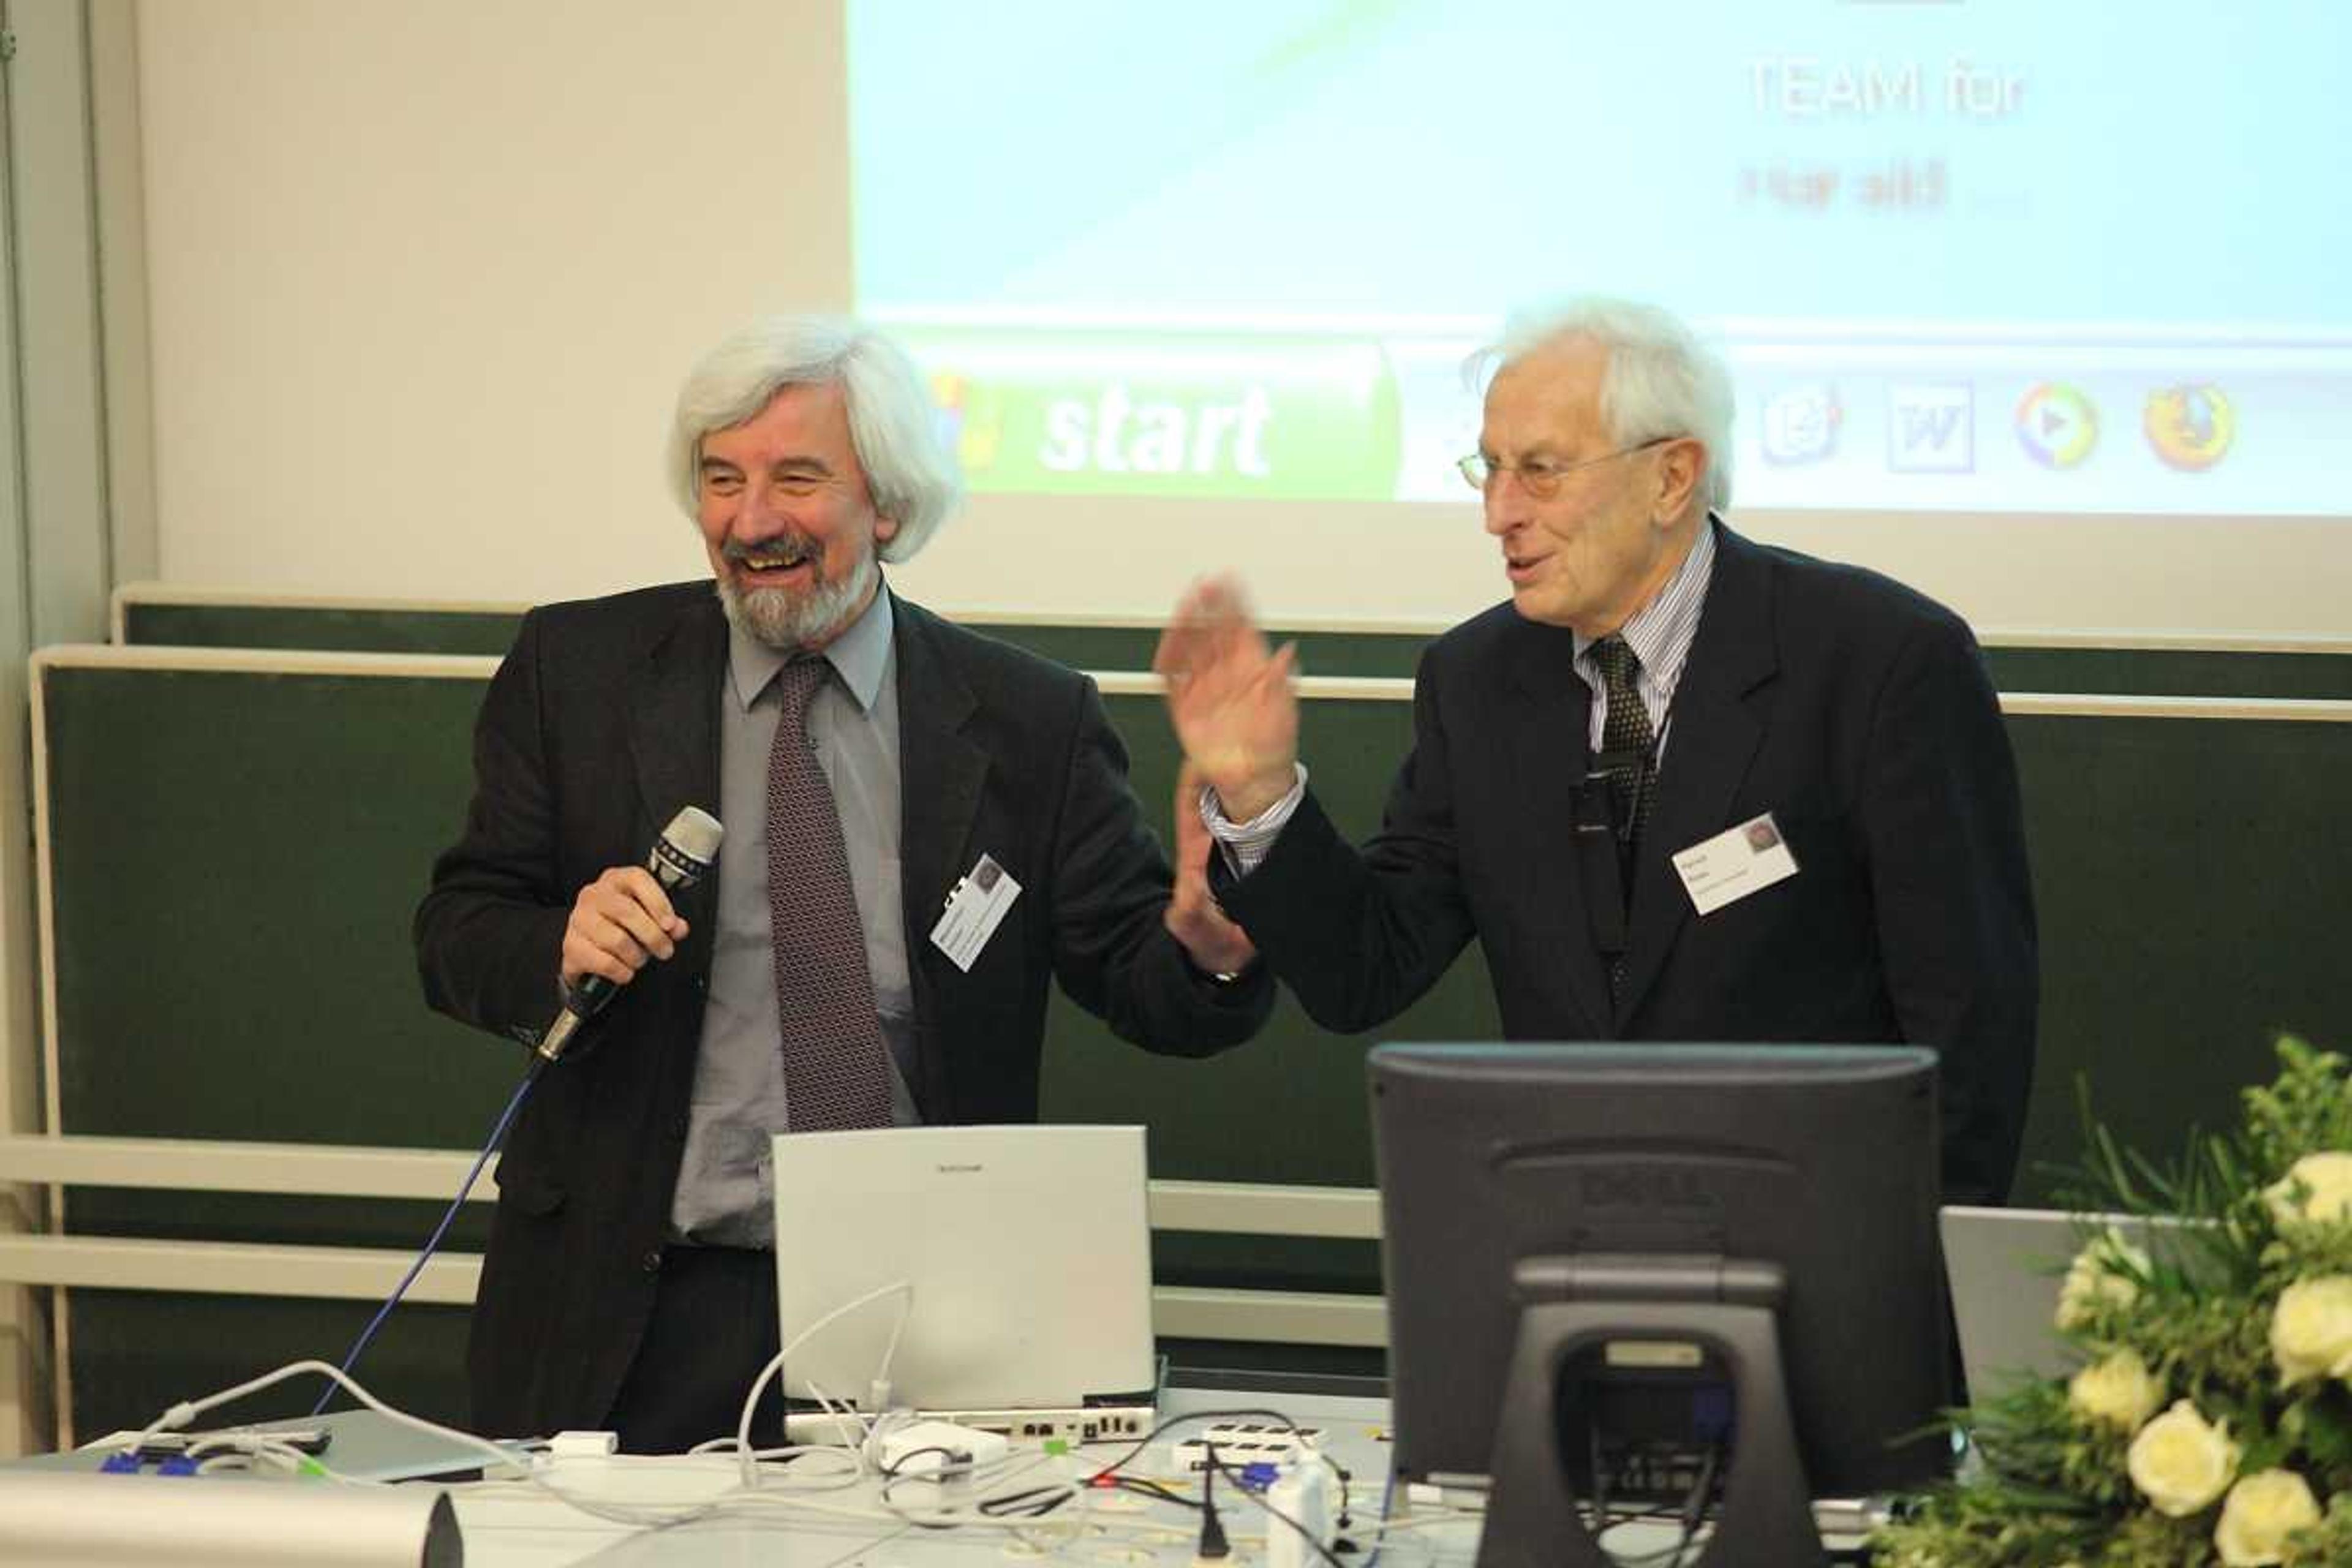 Maximilian Haider with H. Rose at Max’s birthday-symposium at the University of Heidelberg